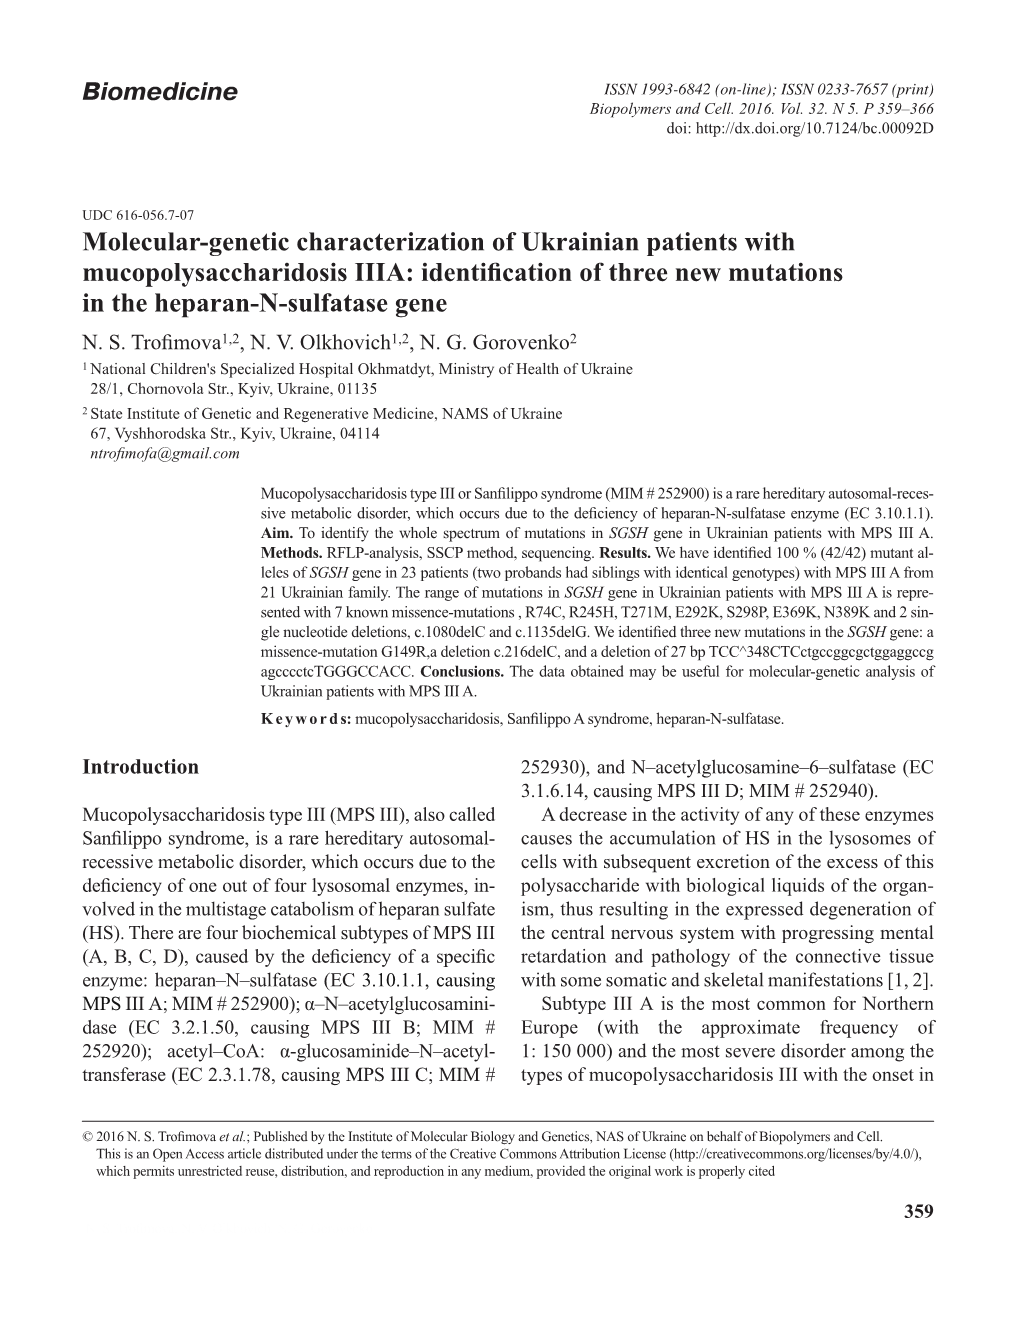 Molecular-Genetic Characterization of Ukrainian Patients with Mucopolysaccharidosis IIIA: Identification of Three New Mutations in the Heparan-N-Sulfatase Gene N